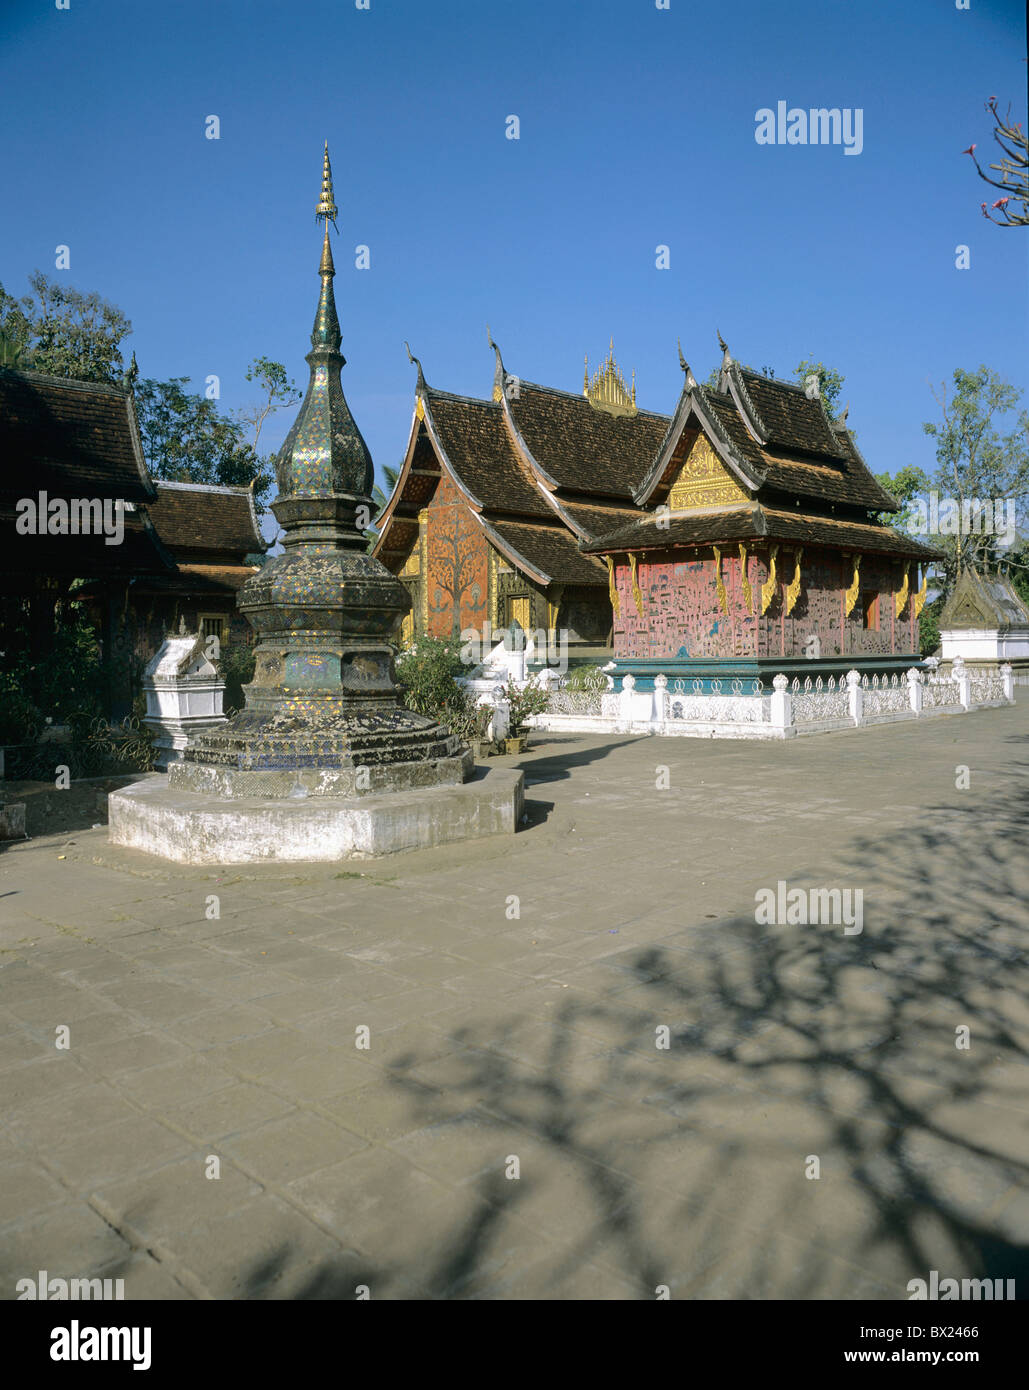 Laos Asia Luang Prabang royal residence building construction temple UNESCO world cultural heritage Stock Photo